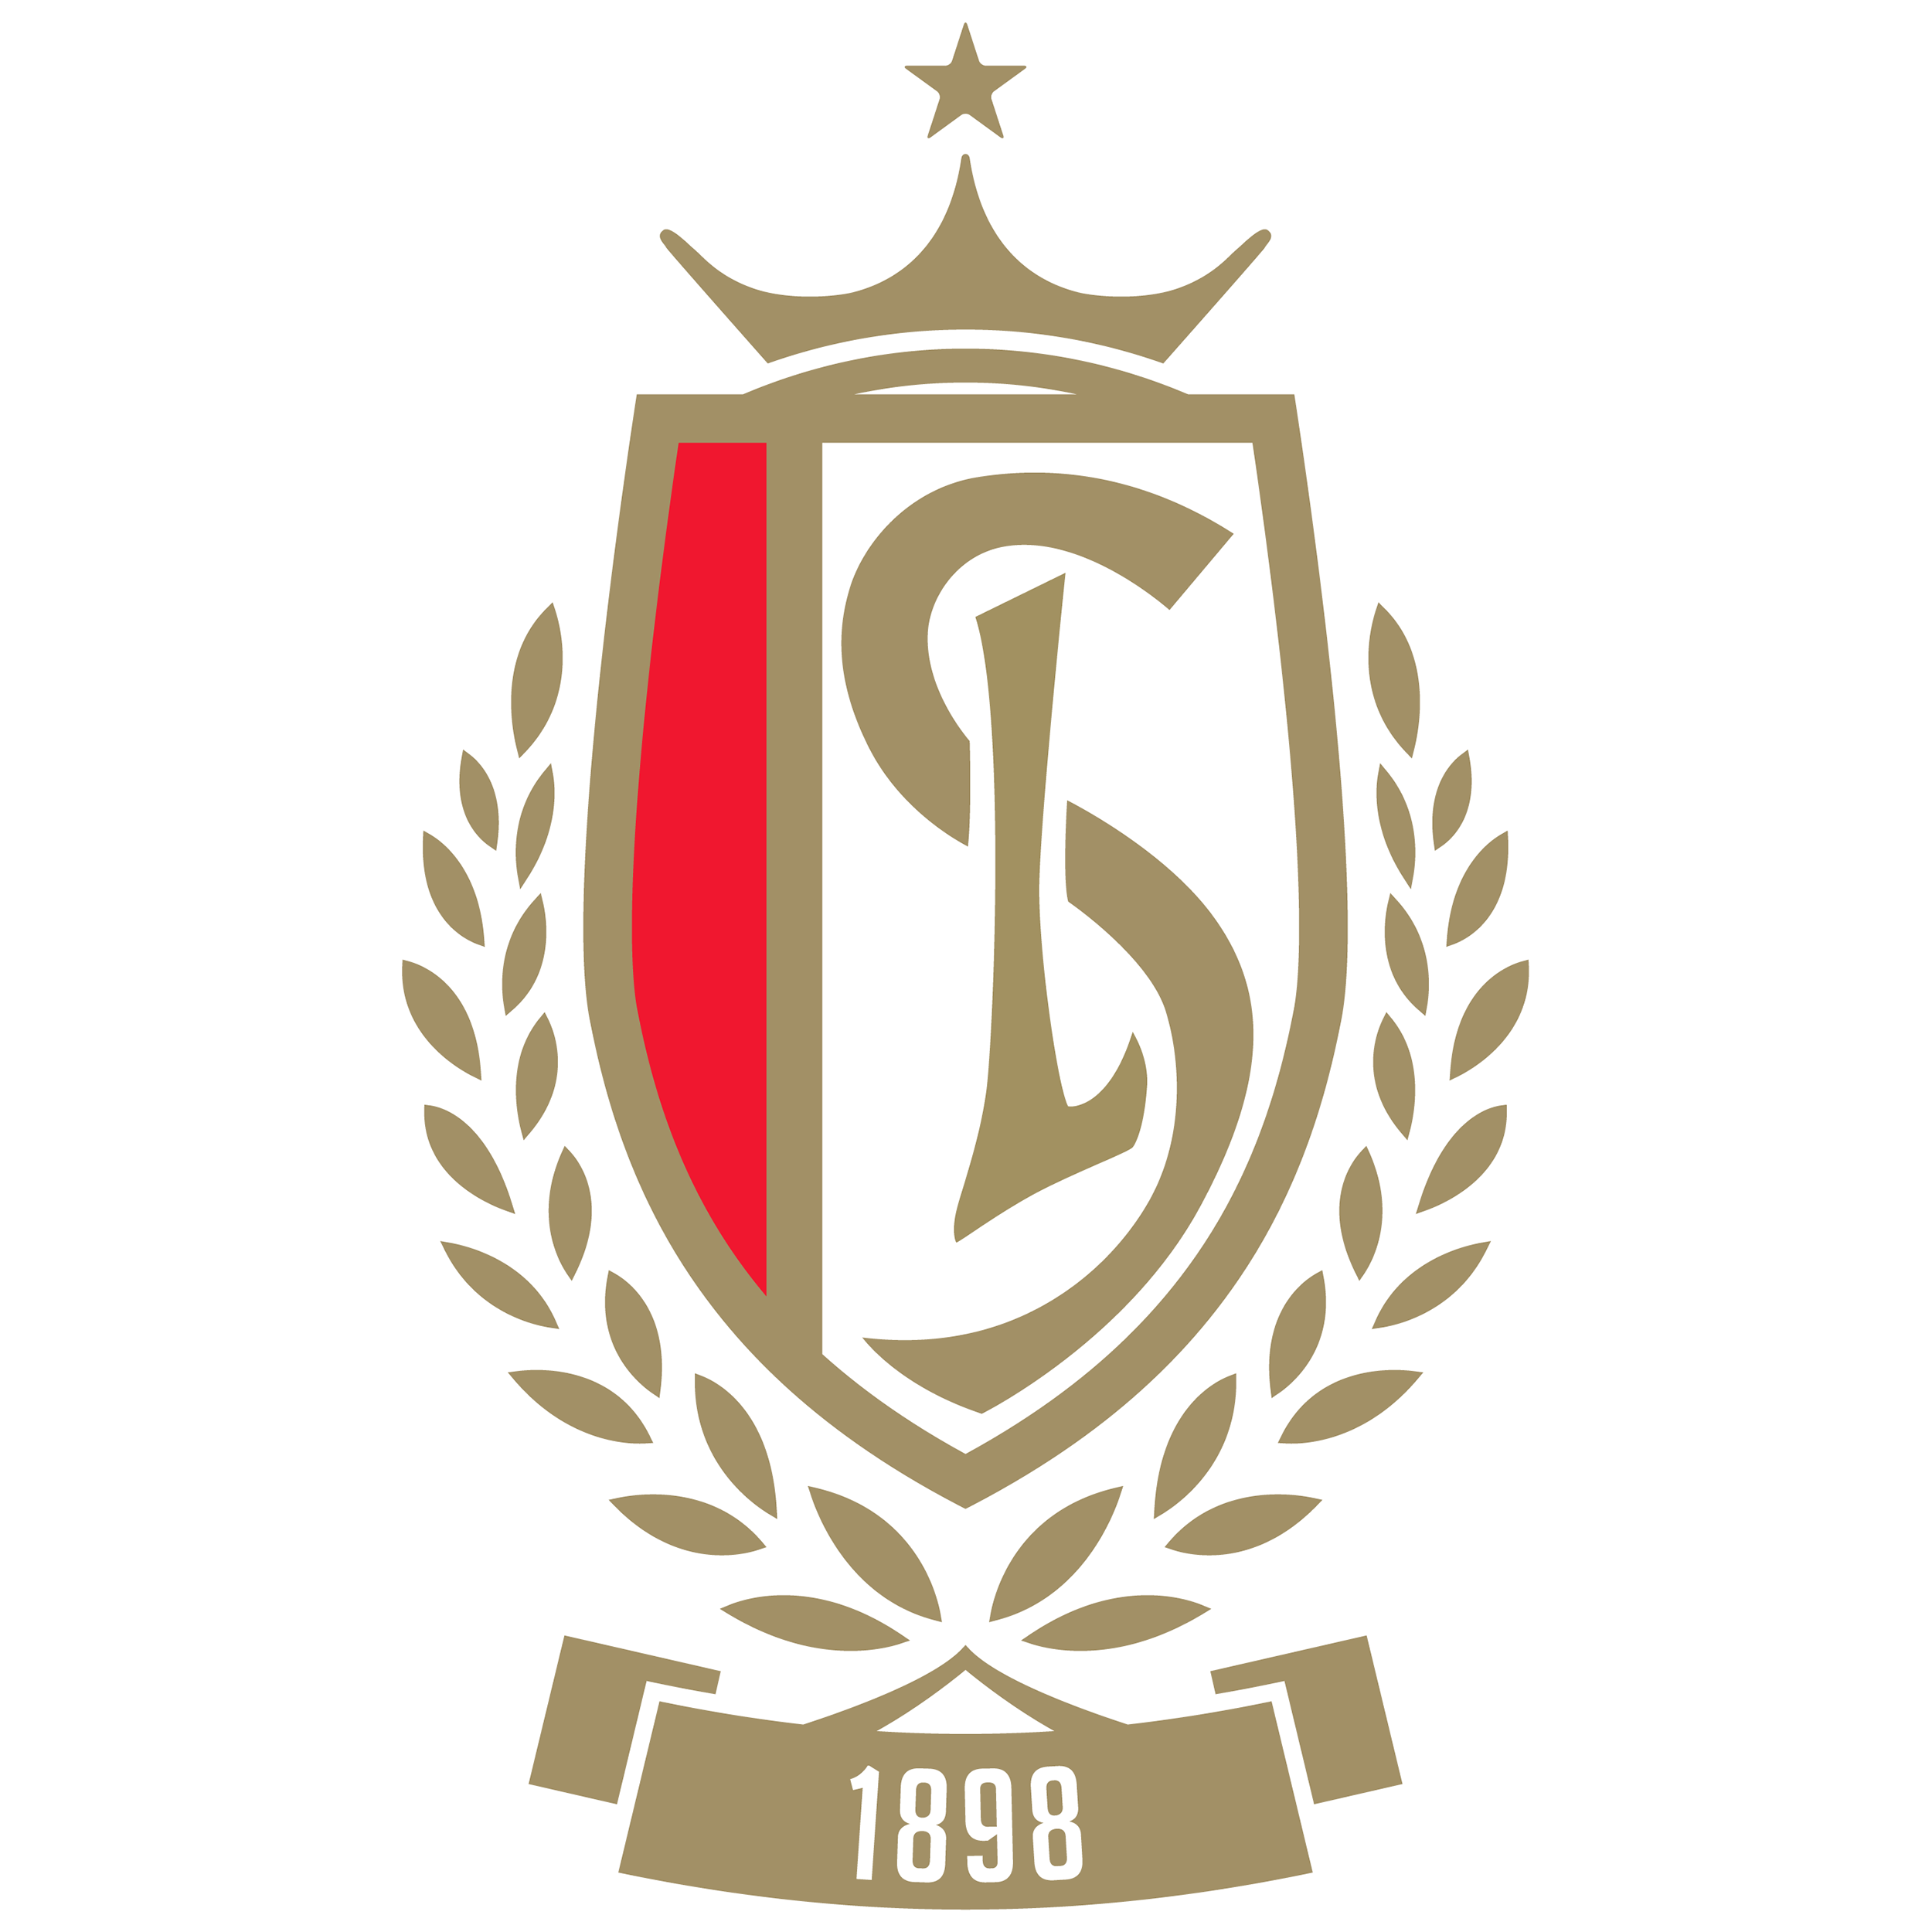 Logo Standard de Liège